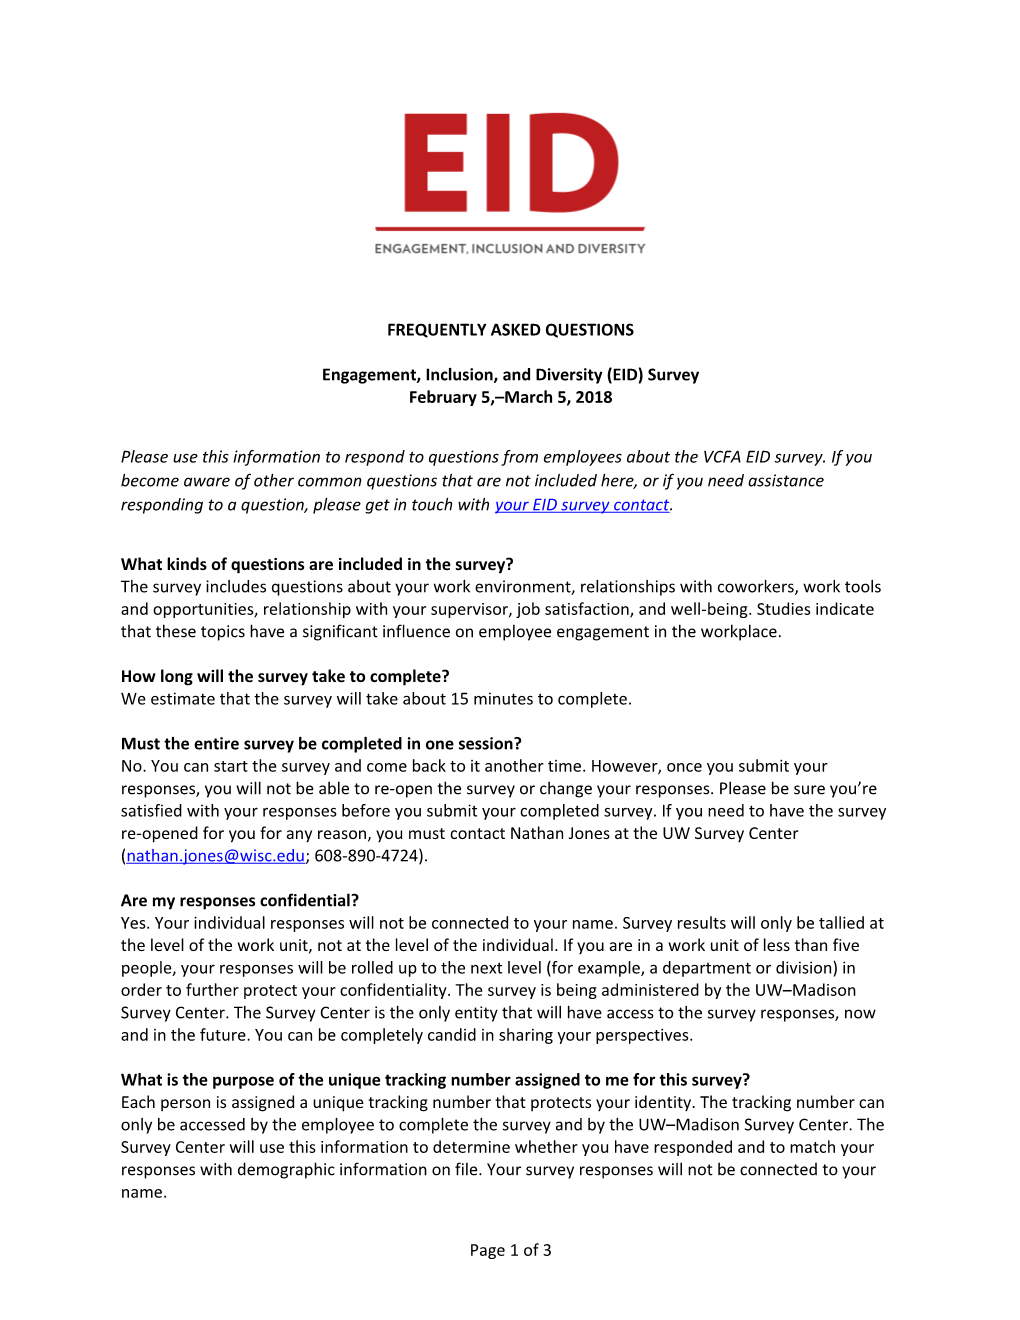 Engagement, Inclusion, and Diversity (EID) Survey